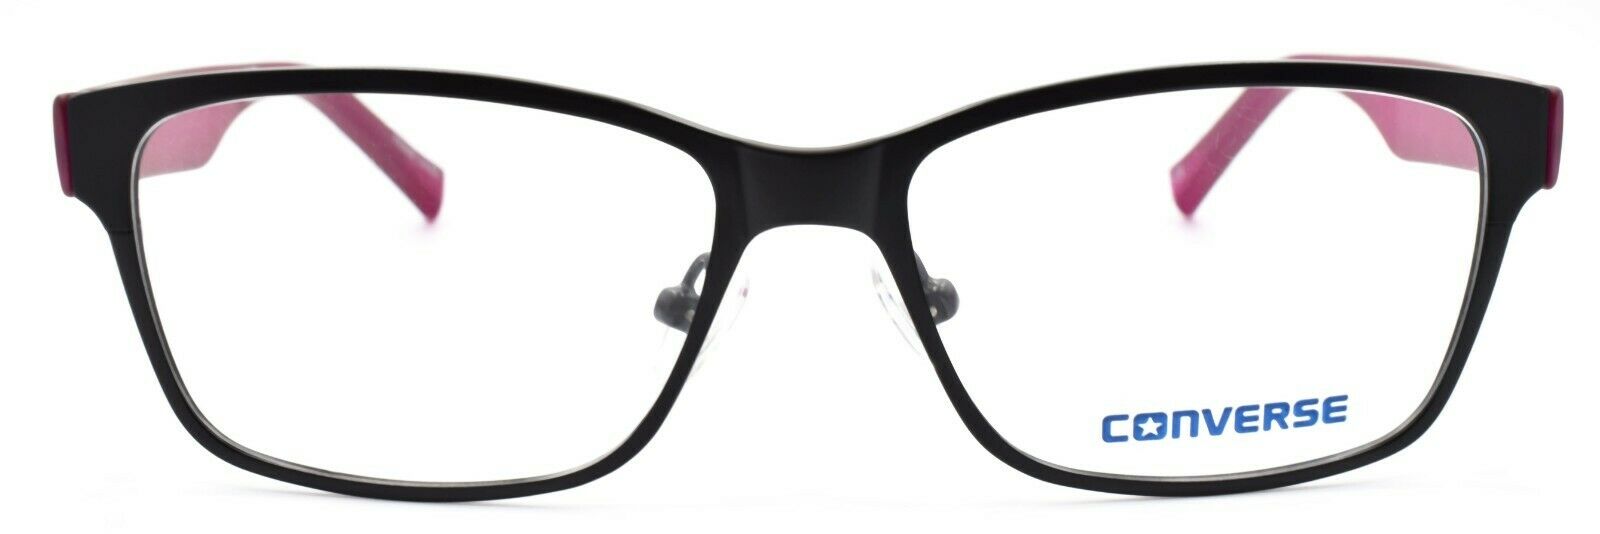 2-CONVERSE Shutter Women's Eyeglasses Frames 49-14-135 Black / Fuchsia + CASE-751286238457-IKSpecs